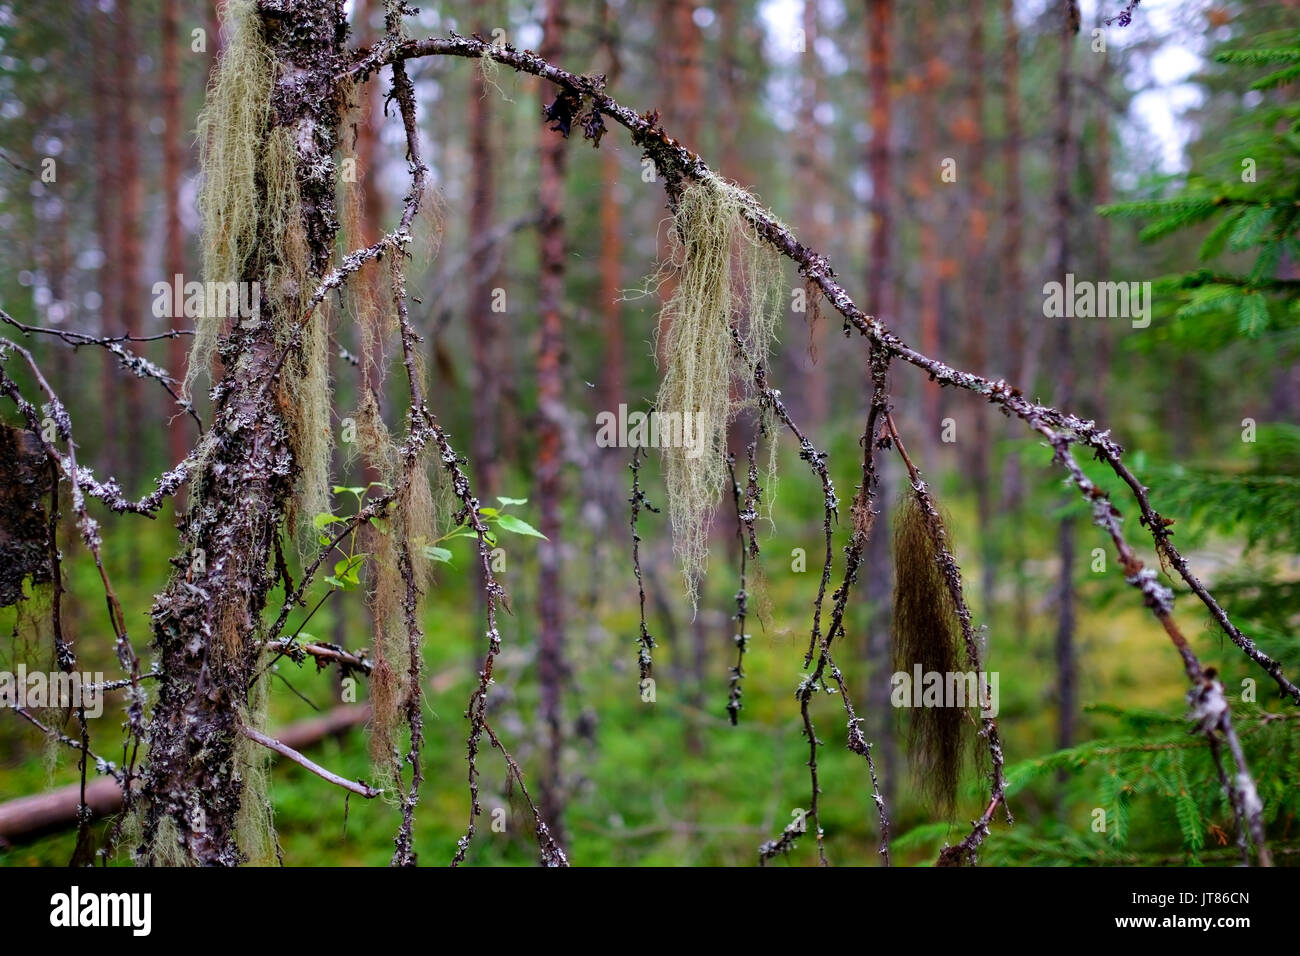 A multicolored lichen Usnea hangs on a birch branch in a wild forest. Stock Photo